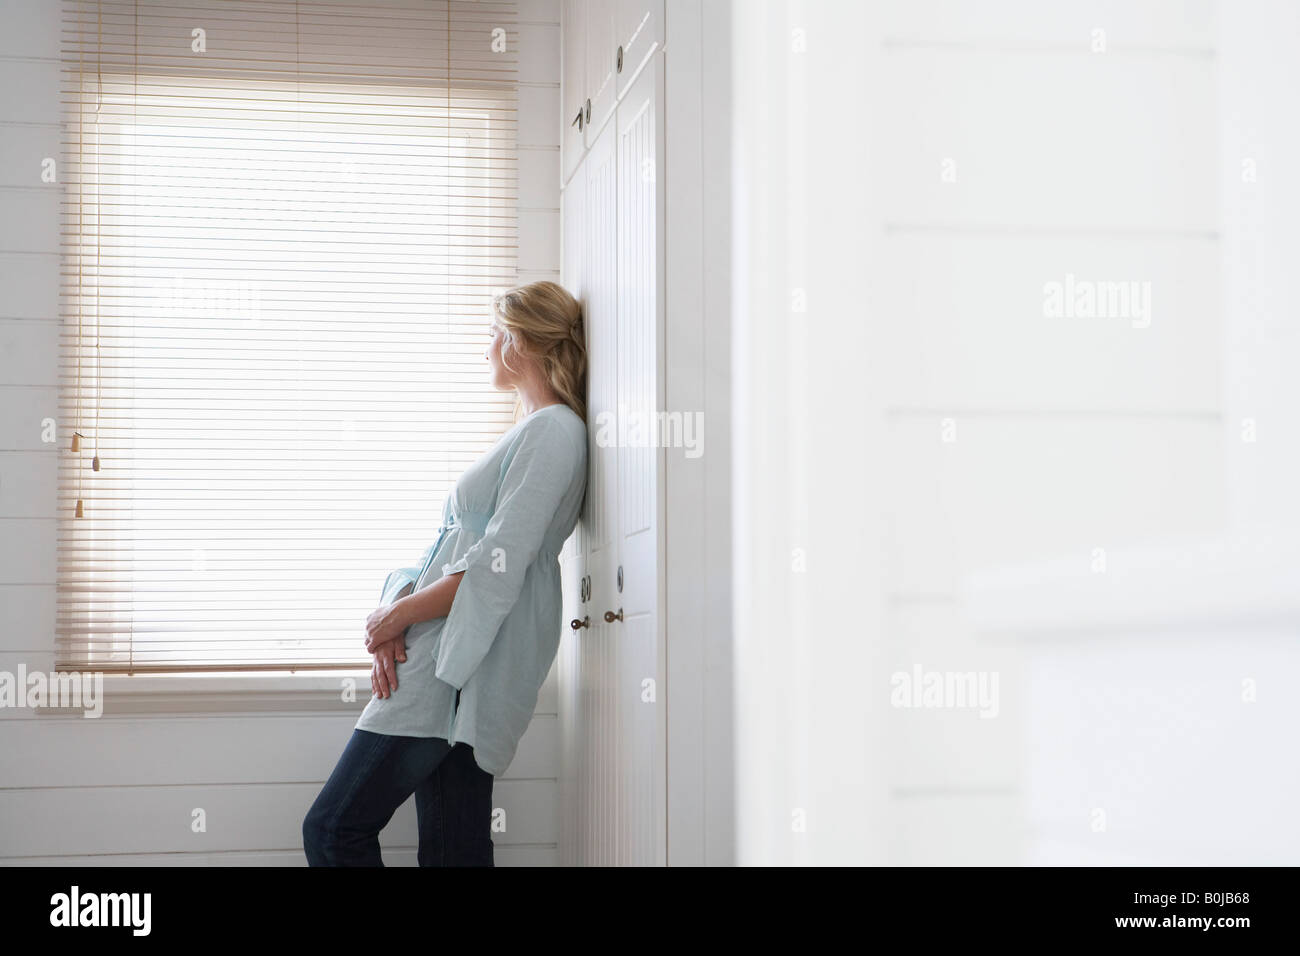 Woman Standing by Bathroom Window Stock Photo - Alamy